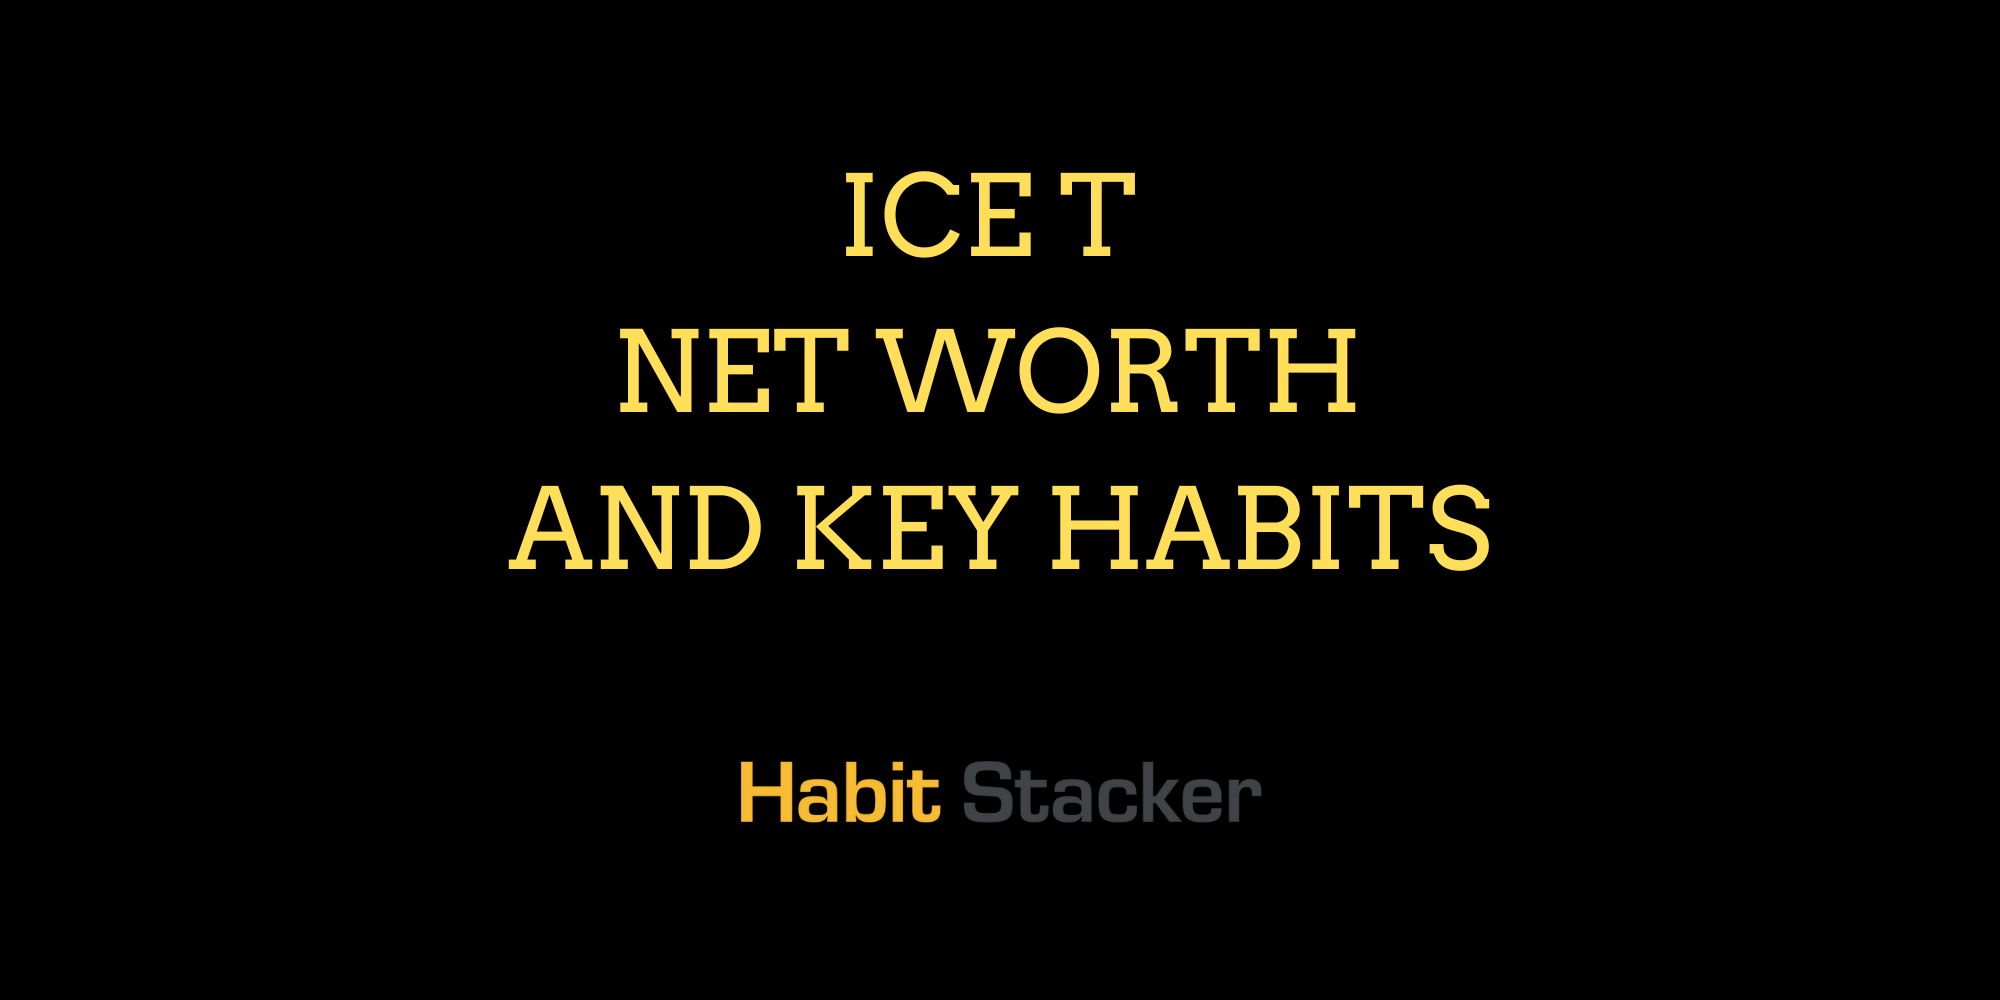 Ice T Net Worth and Key Habits